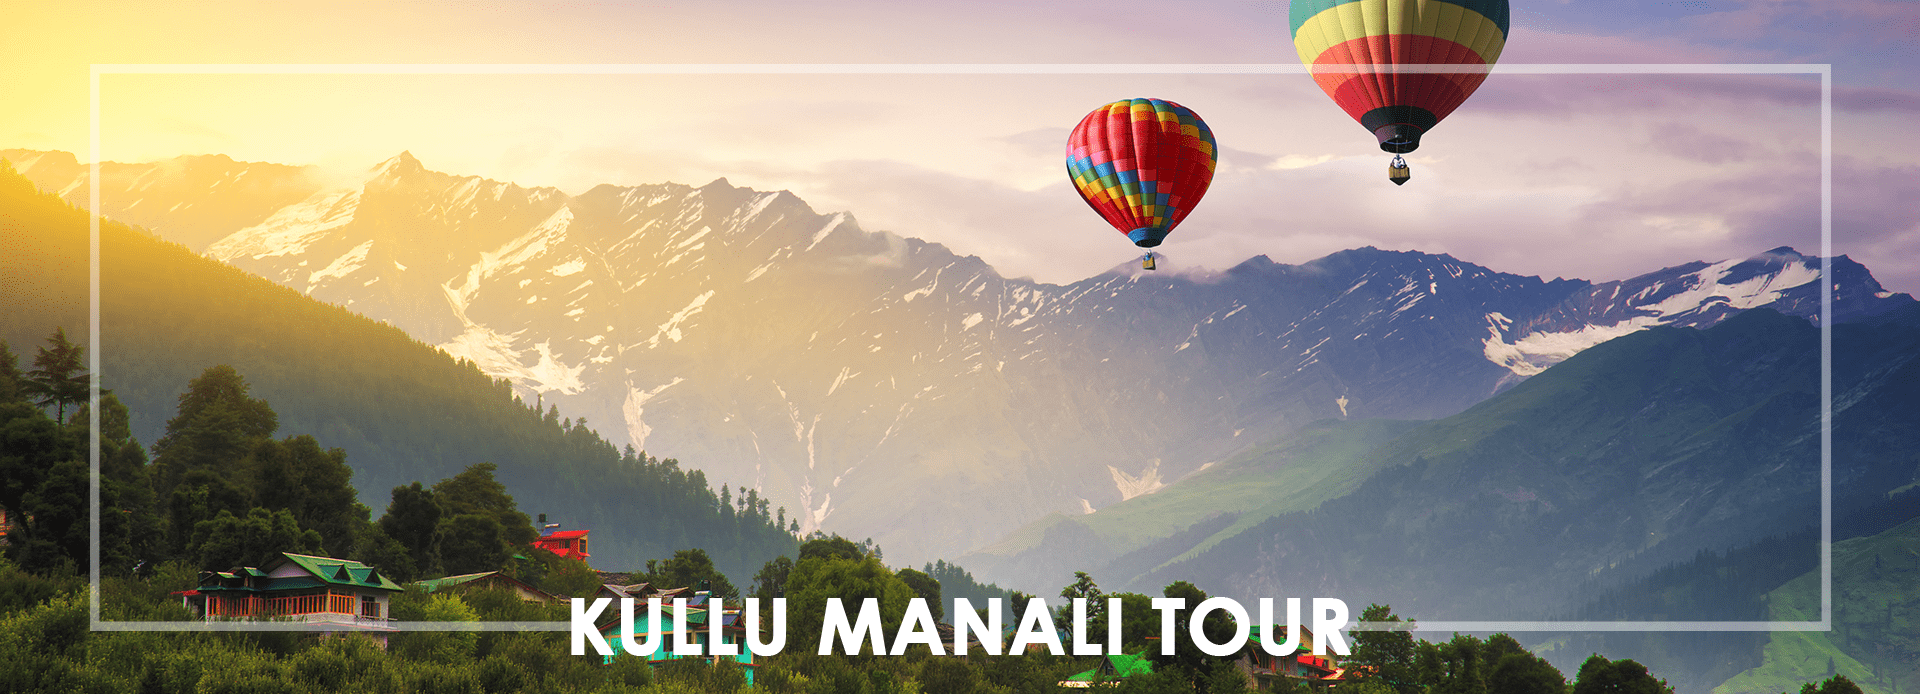 Kullu Manali Tour Packages